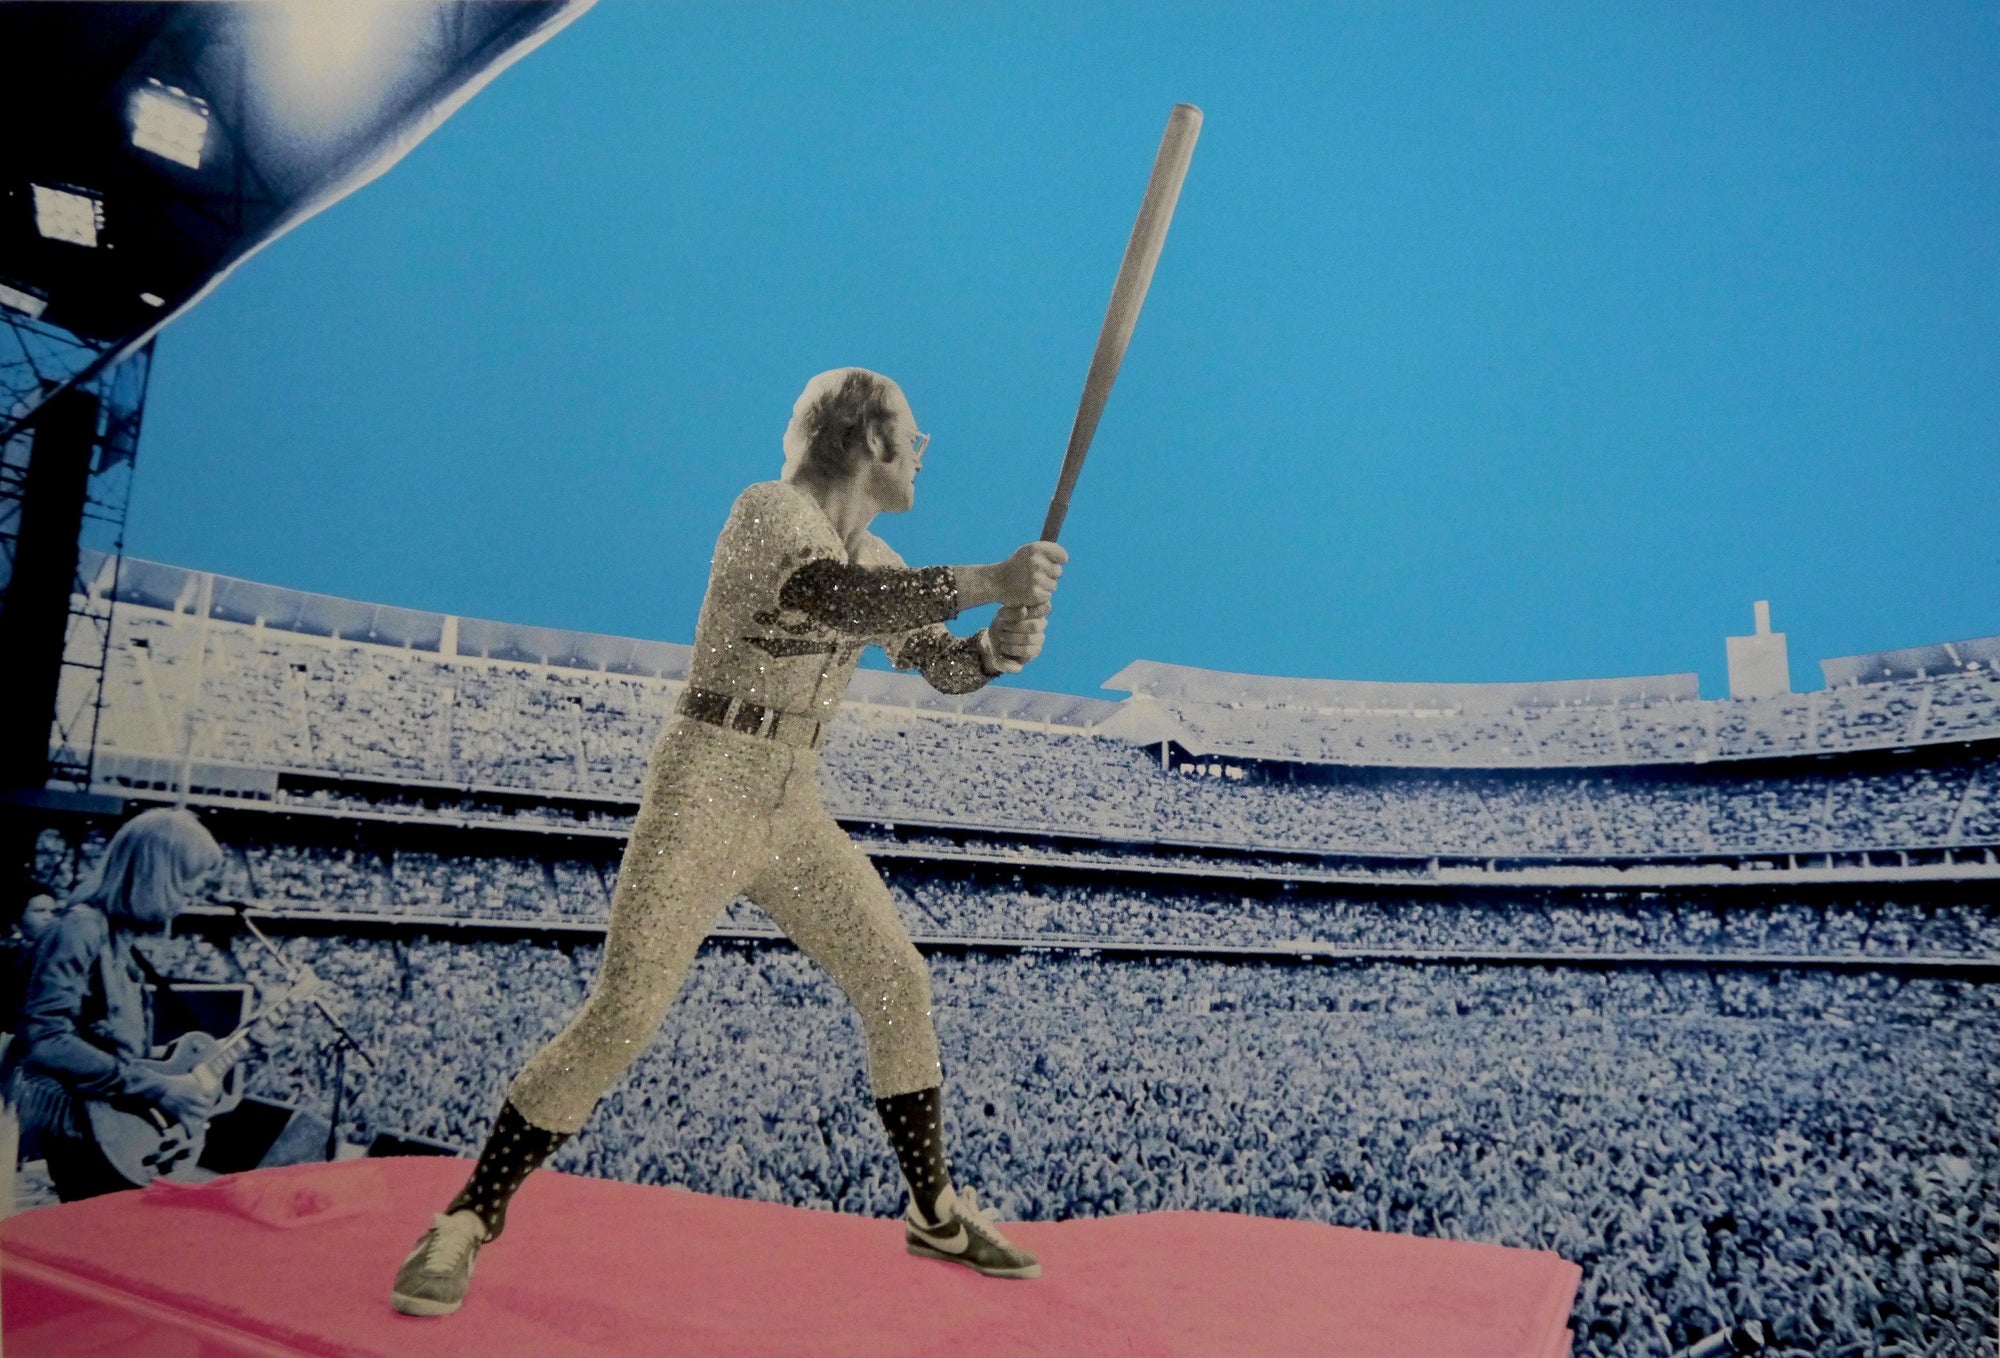 David Studwell - Elton John: Home Run - Dodger Stadium 1975